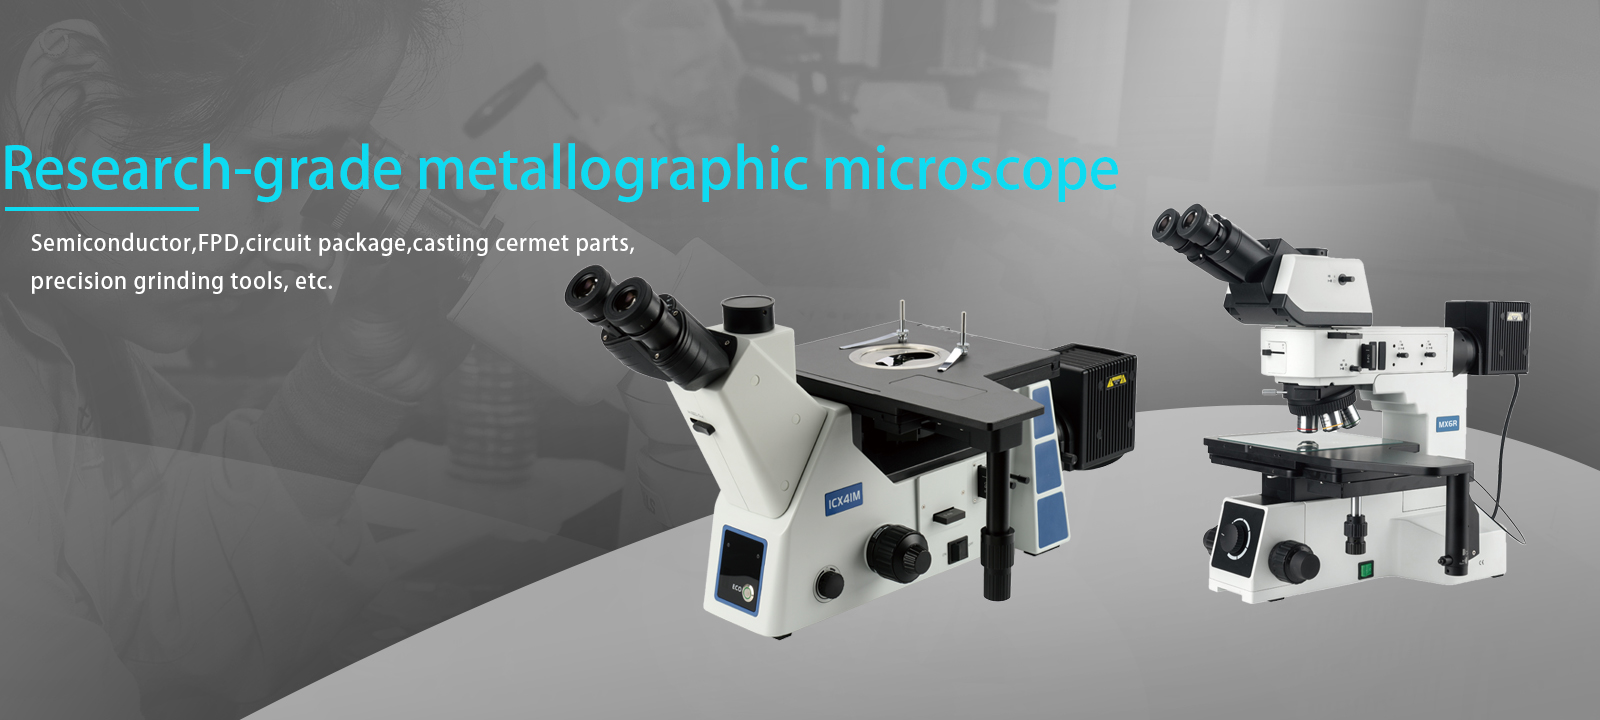 Metallographic electron microscope